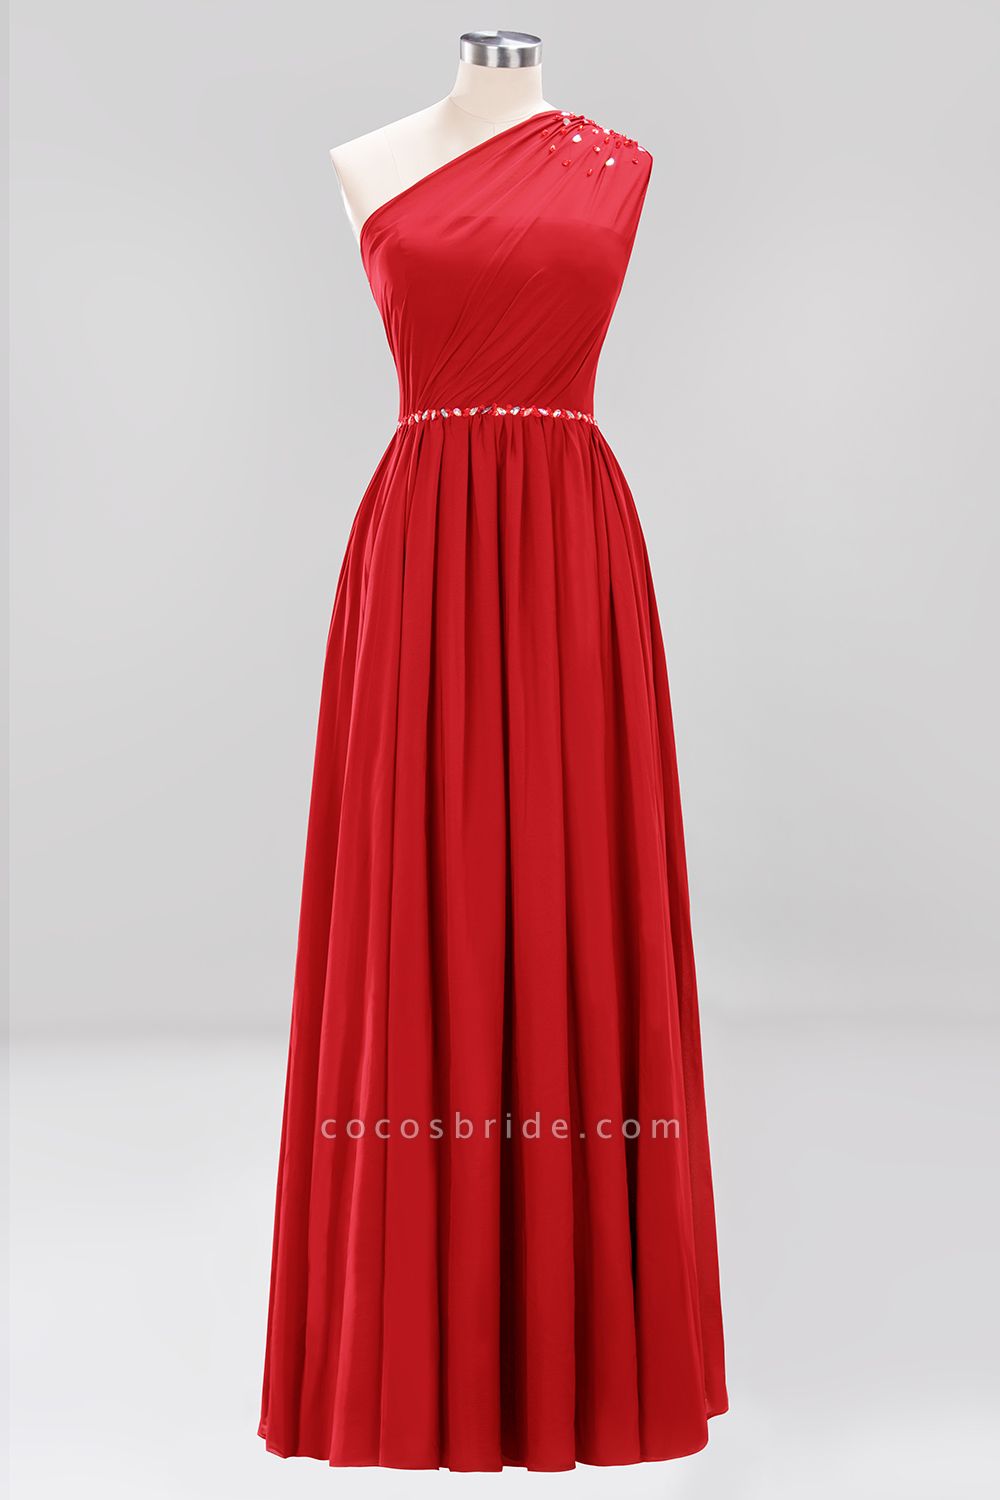 Elegant A-Line Burgundy Chiffon One-Shoulder Sleeveless Ruffles Floor-Length Bridesmaid Dresses with Beadings